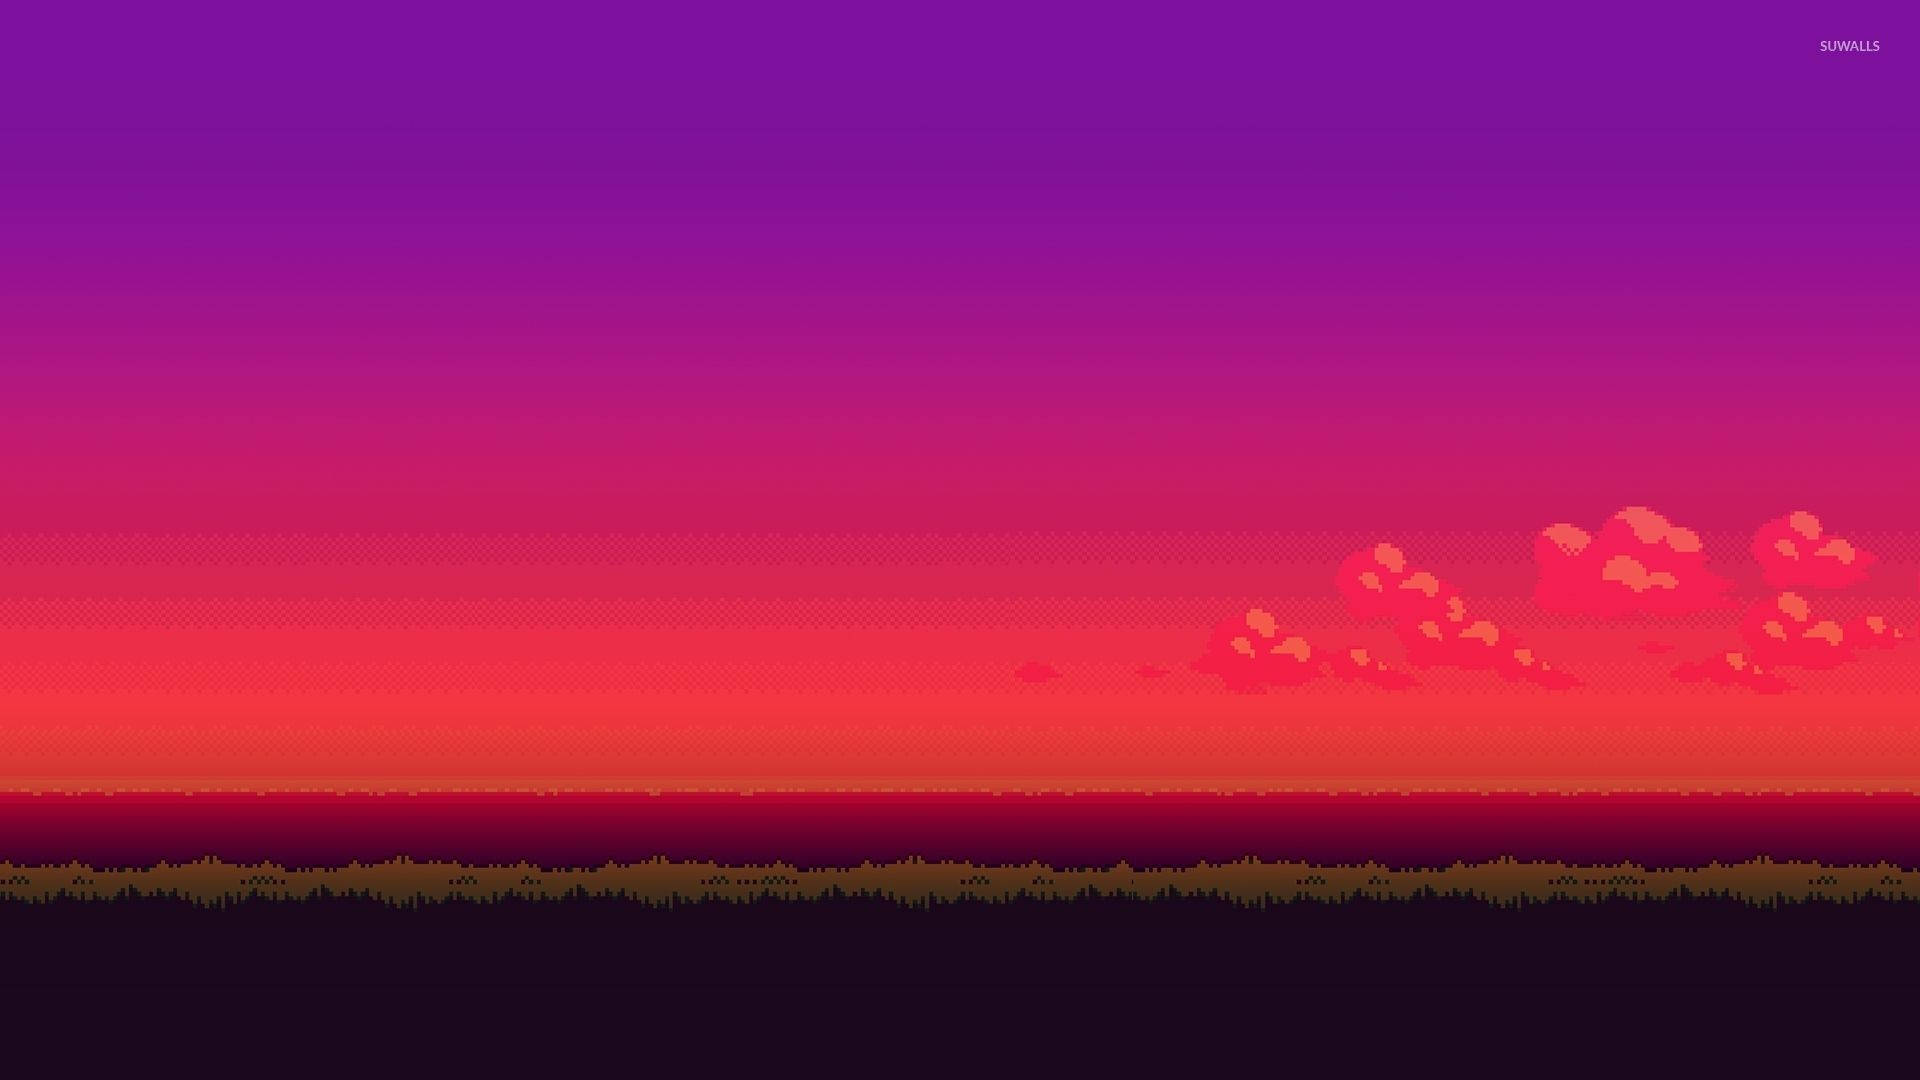 8 Bit Purple Sunset Background